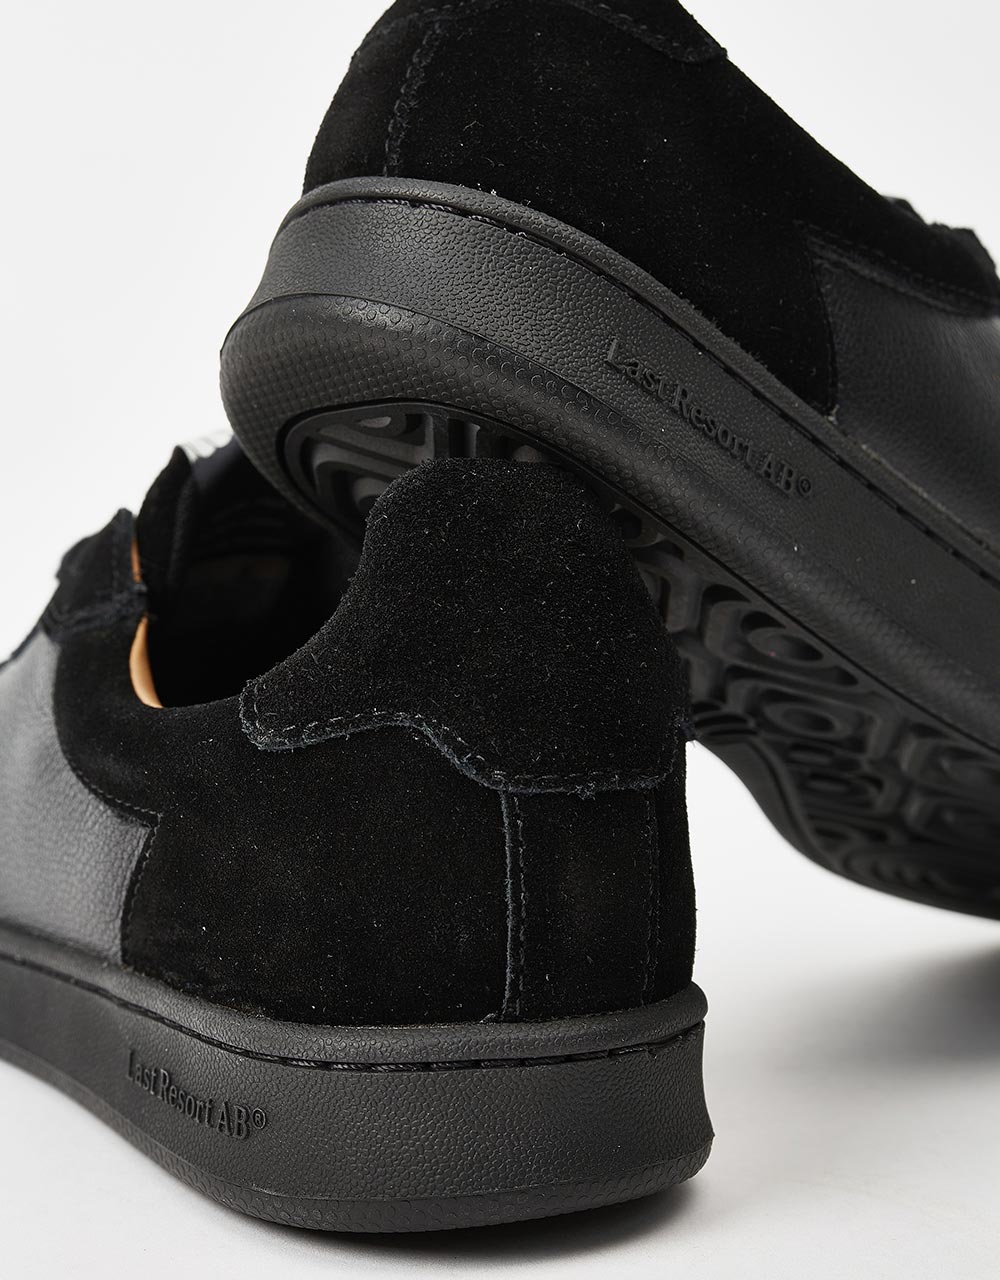 Last Resort AB CM001 Lo Skate Shoes - Black/Black